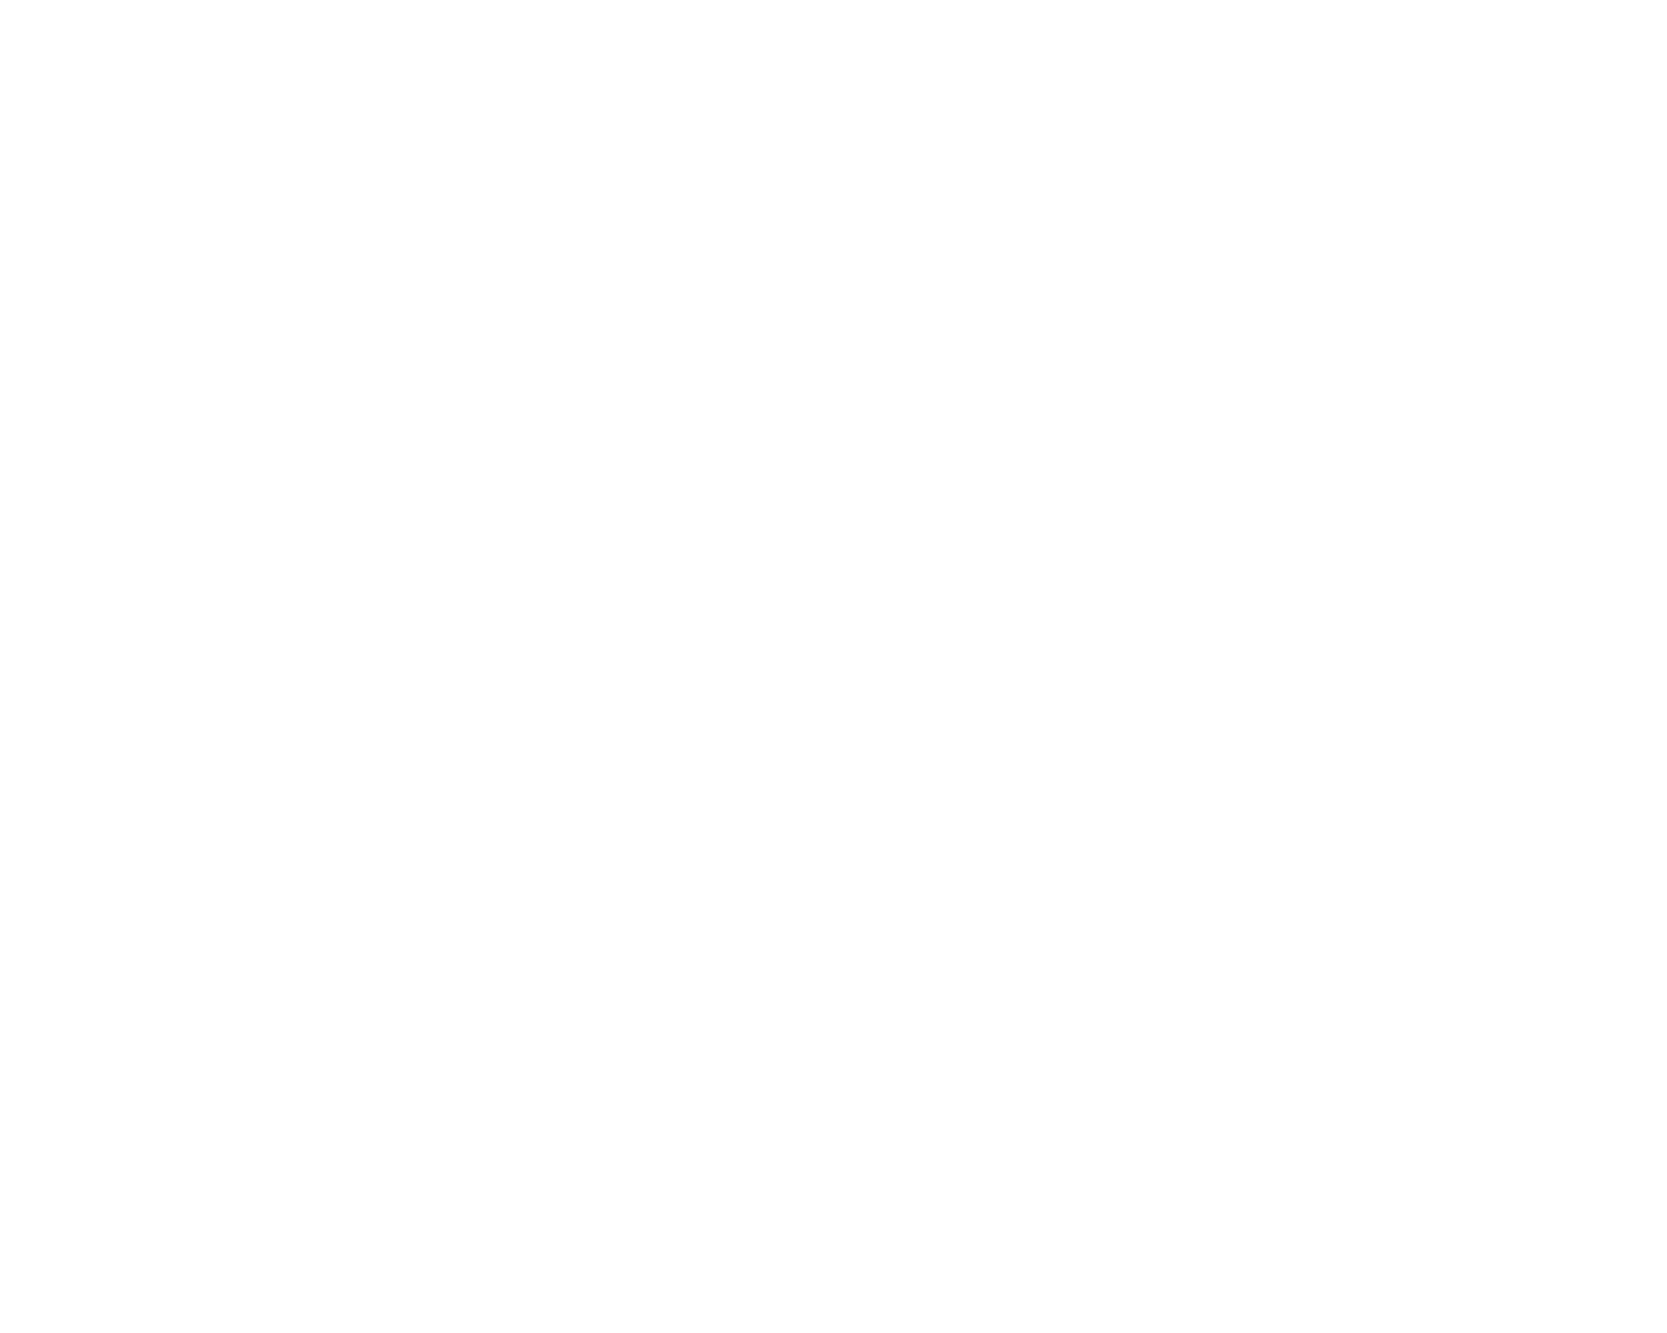 Expertise.com Best Graphic Designers in Glendale Award